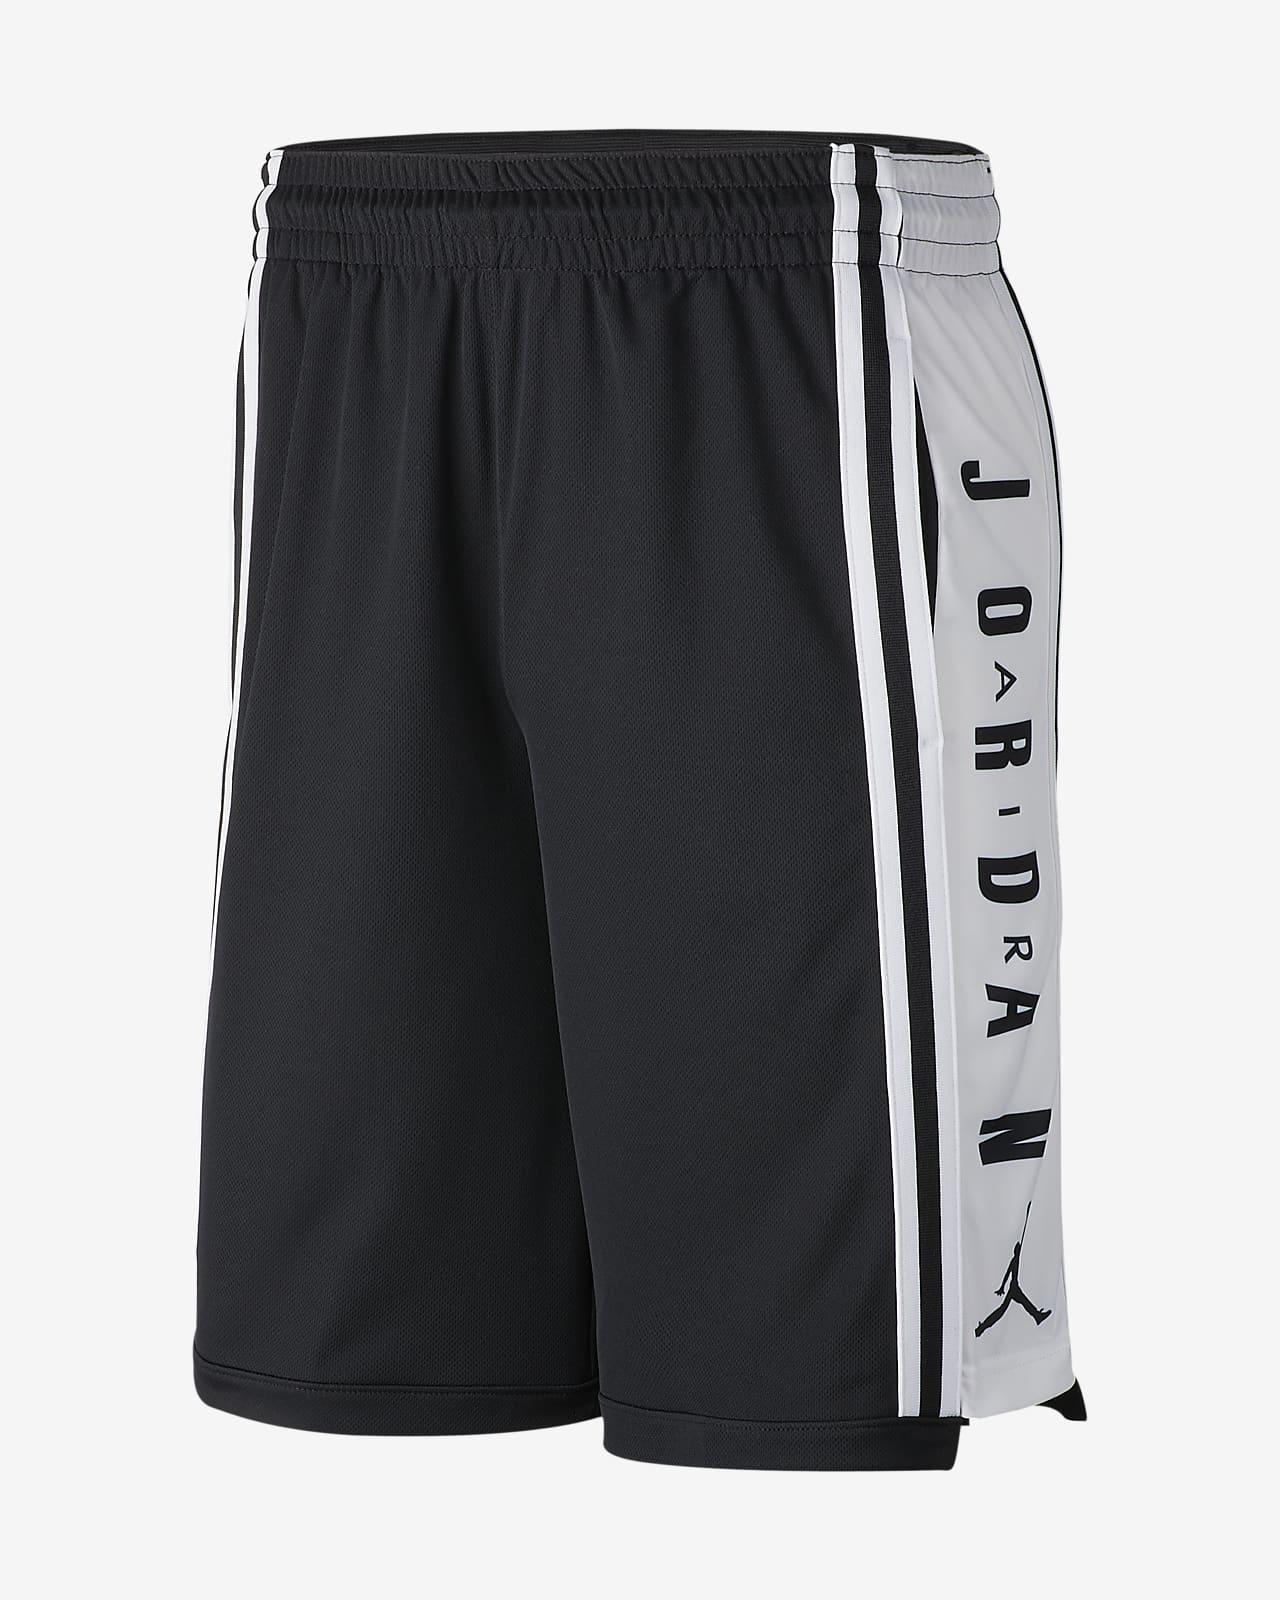 Jordan Men's Basketball Shorts. Nike LU